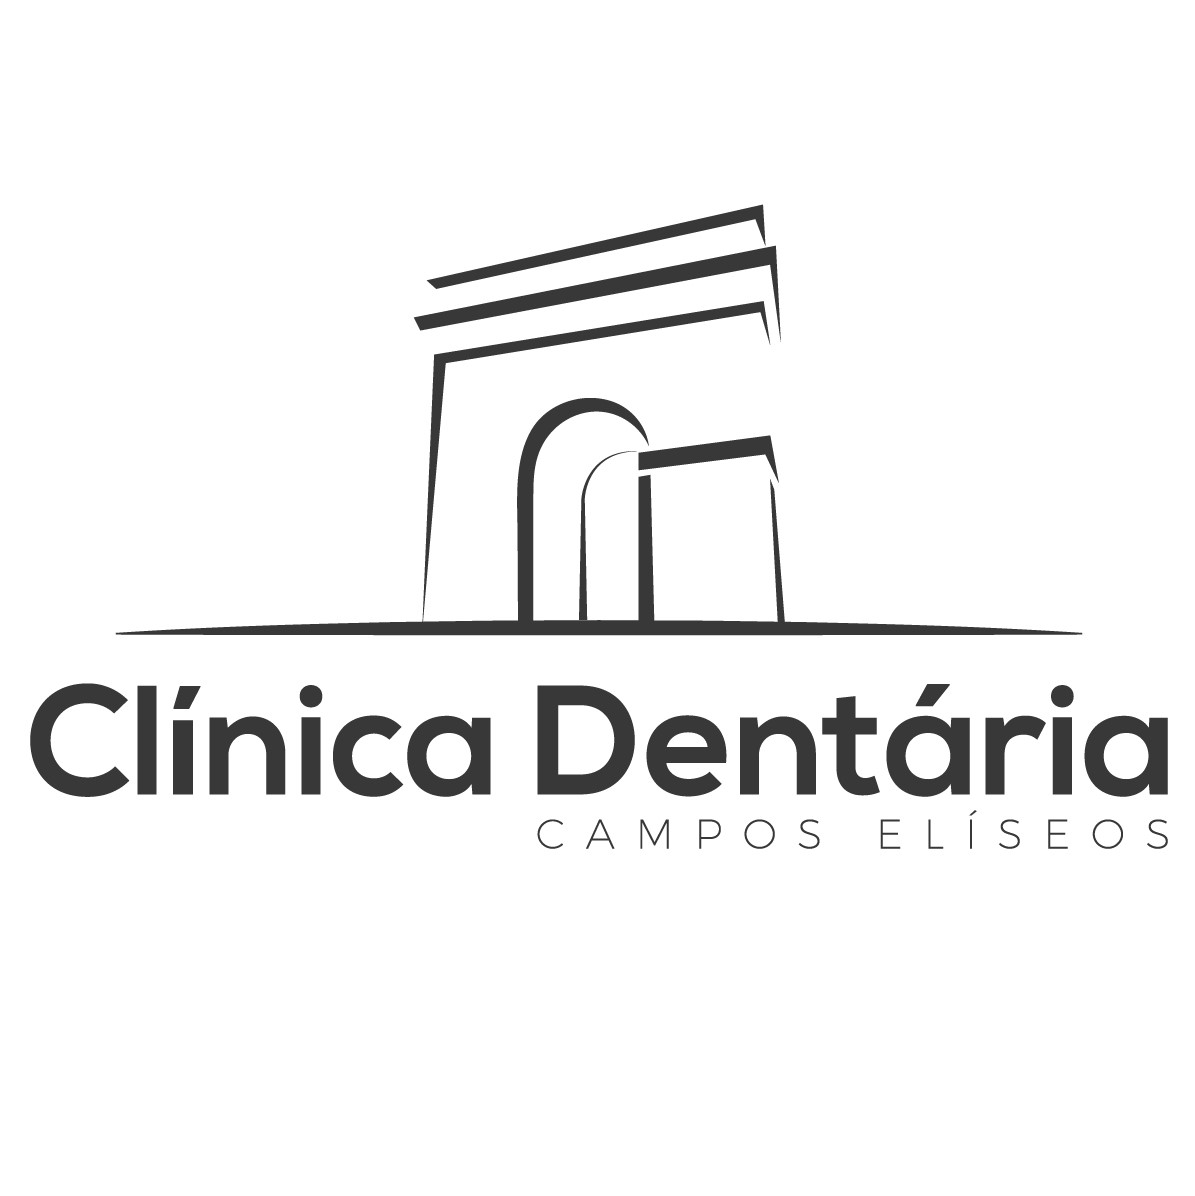 Clínica Dentária Campos Eliseos